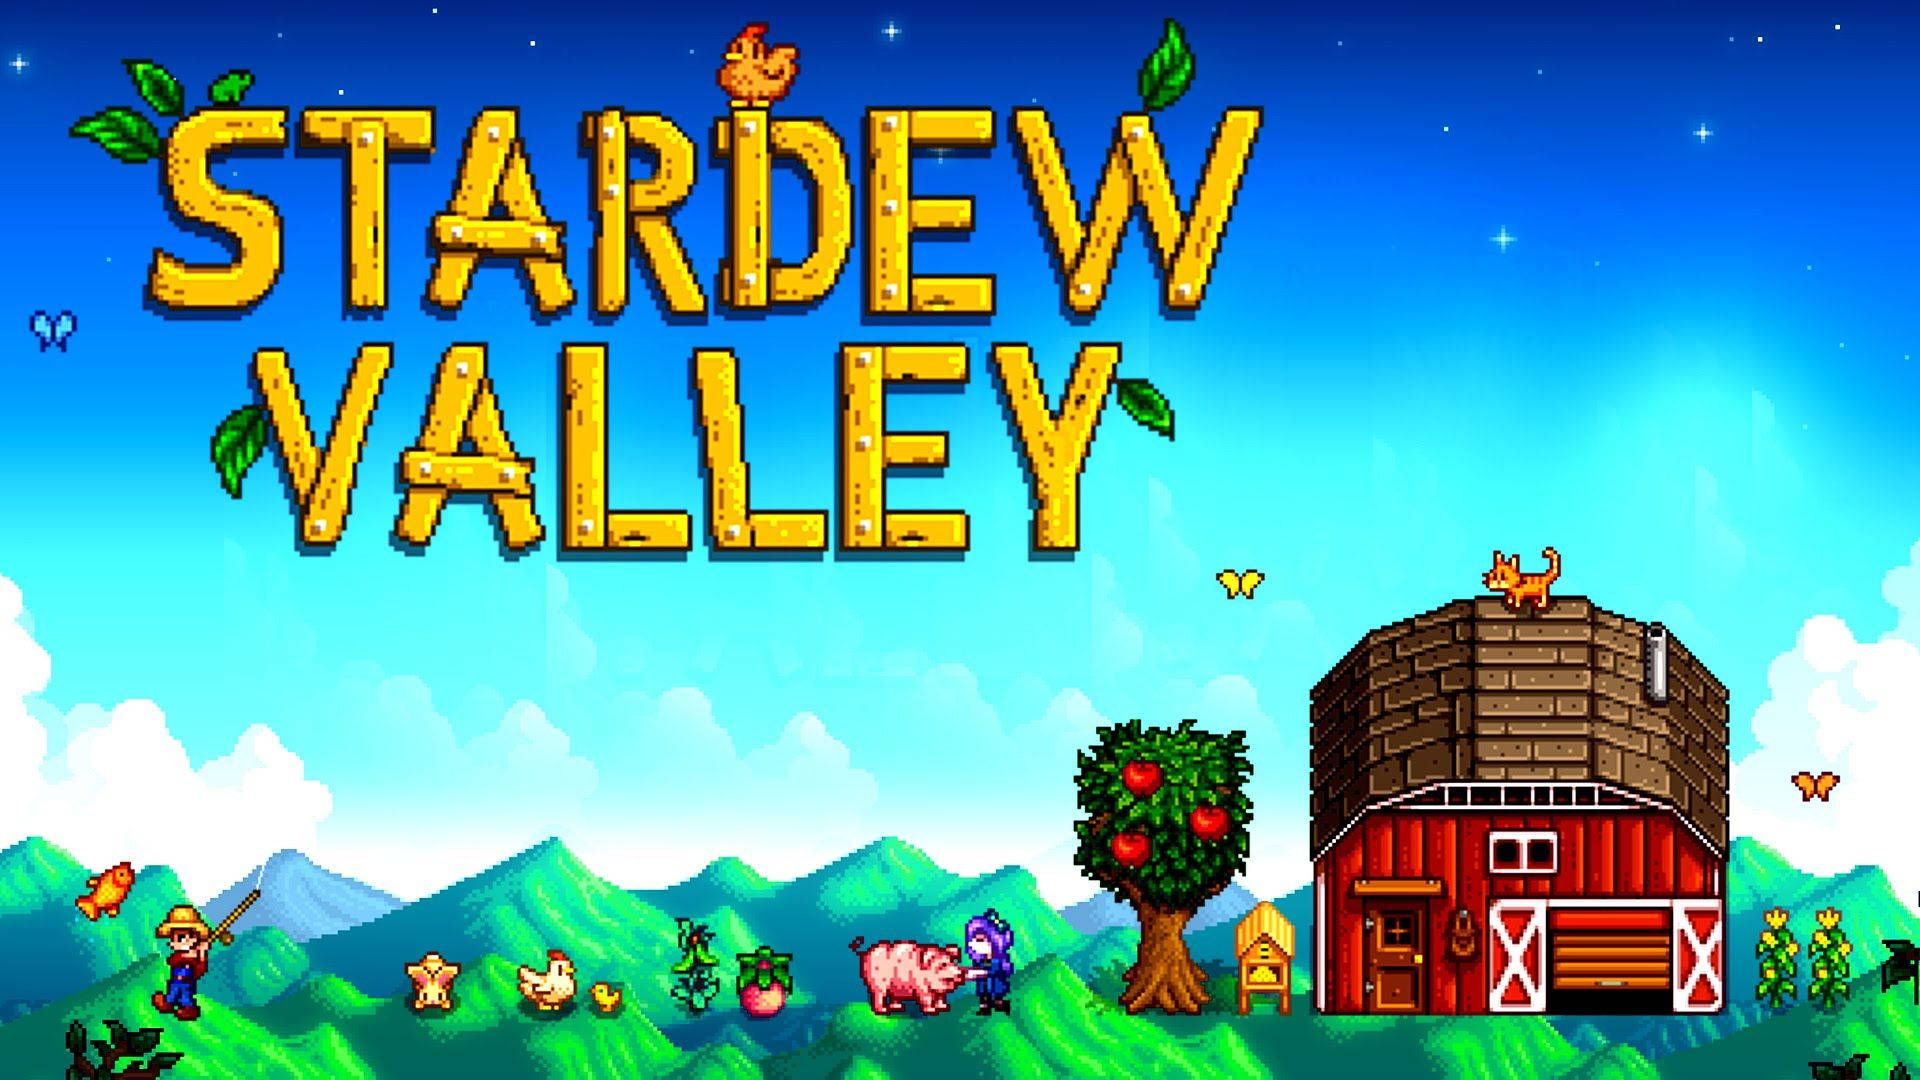 2d Stardew Valley Game Logo Poster Wallpaper